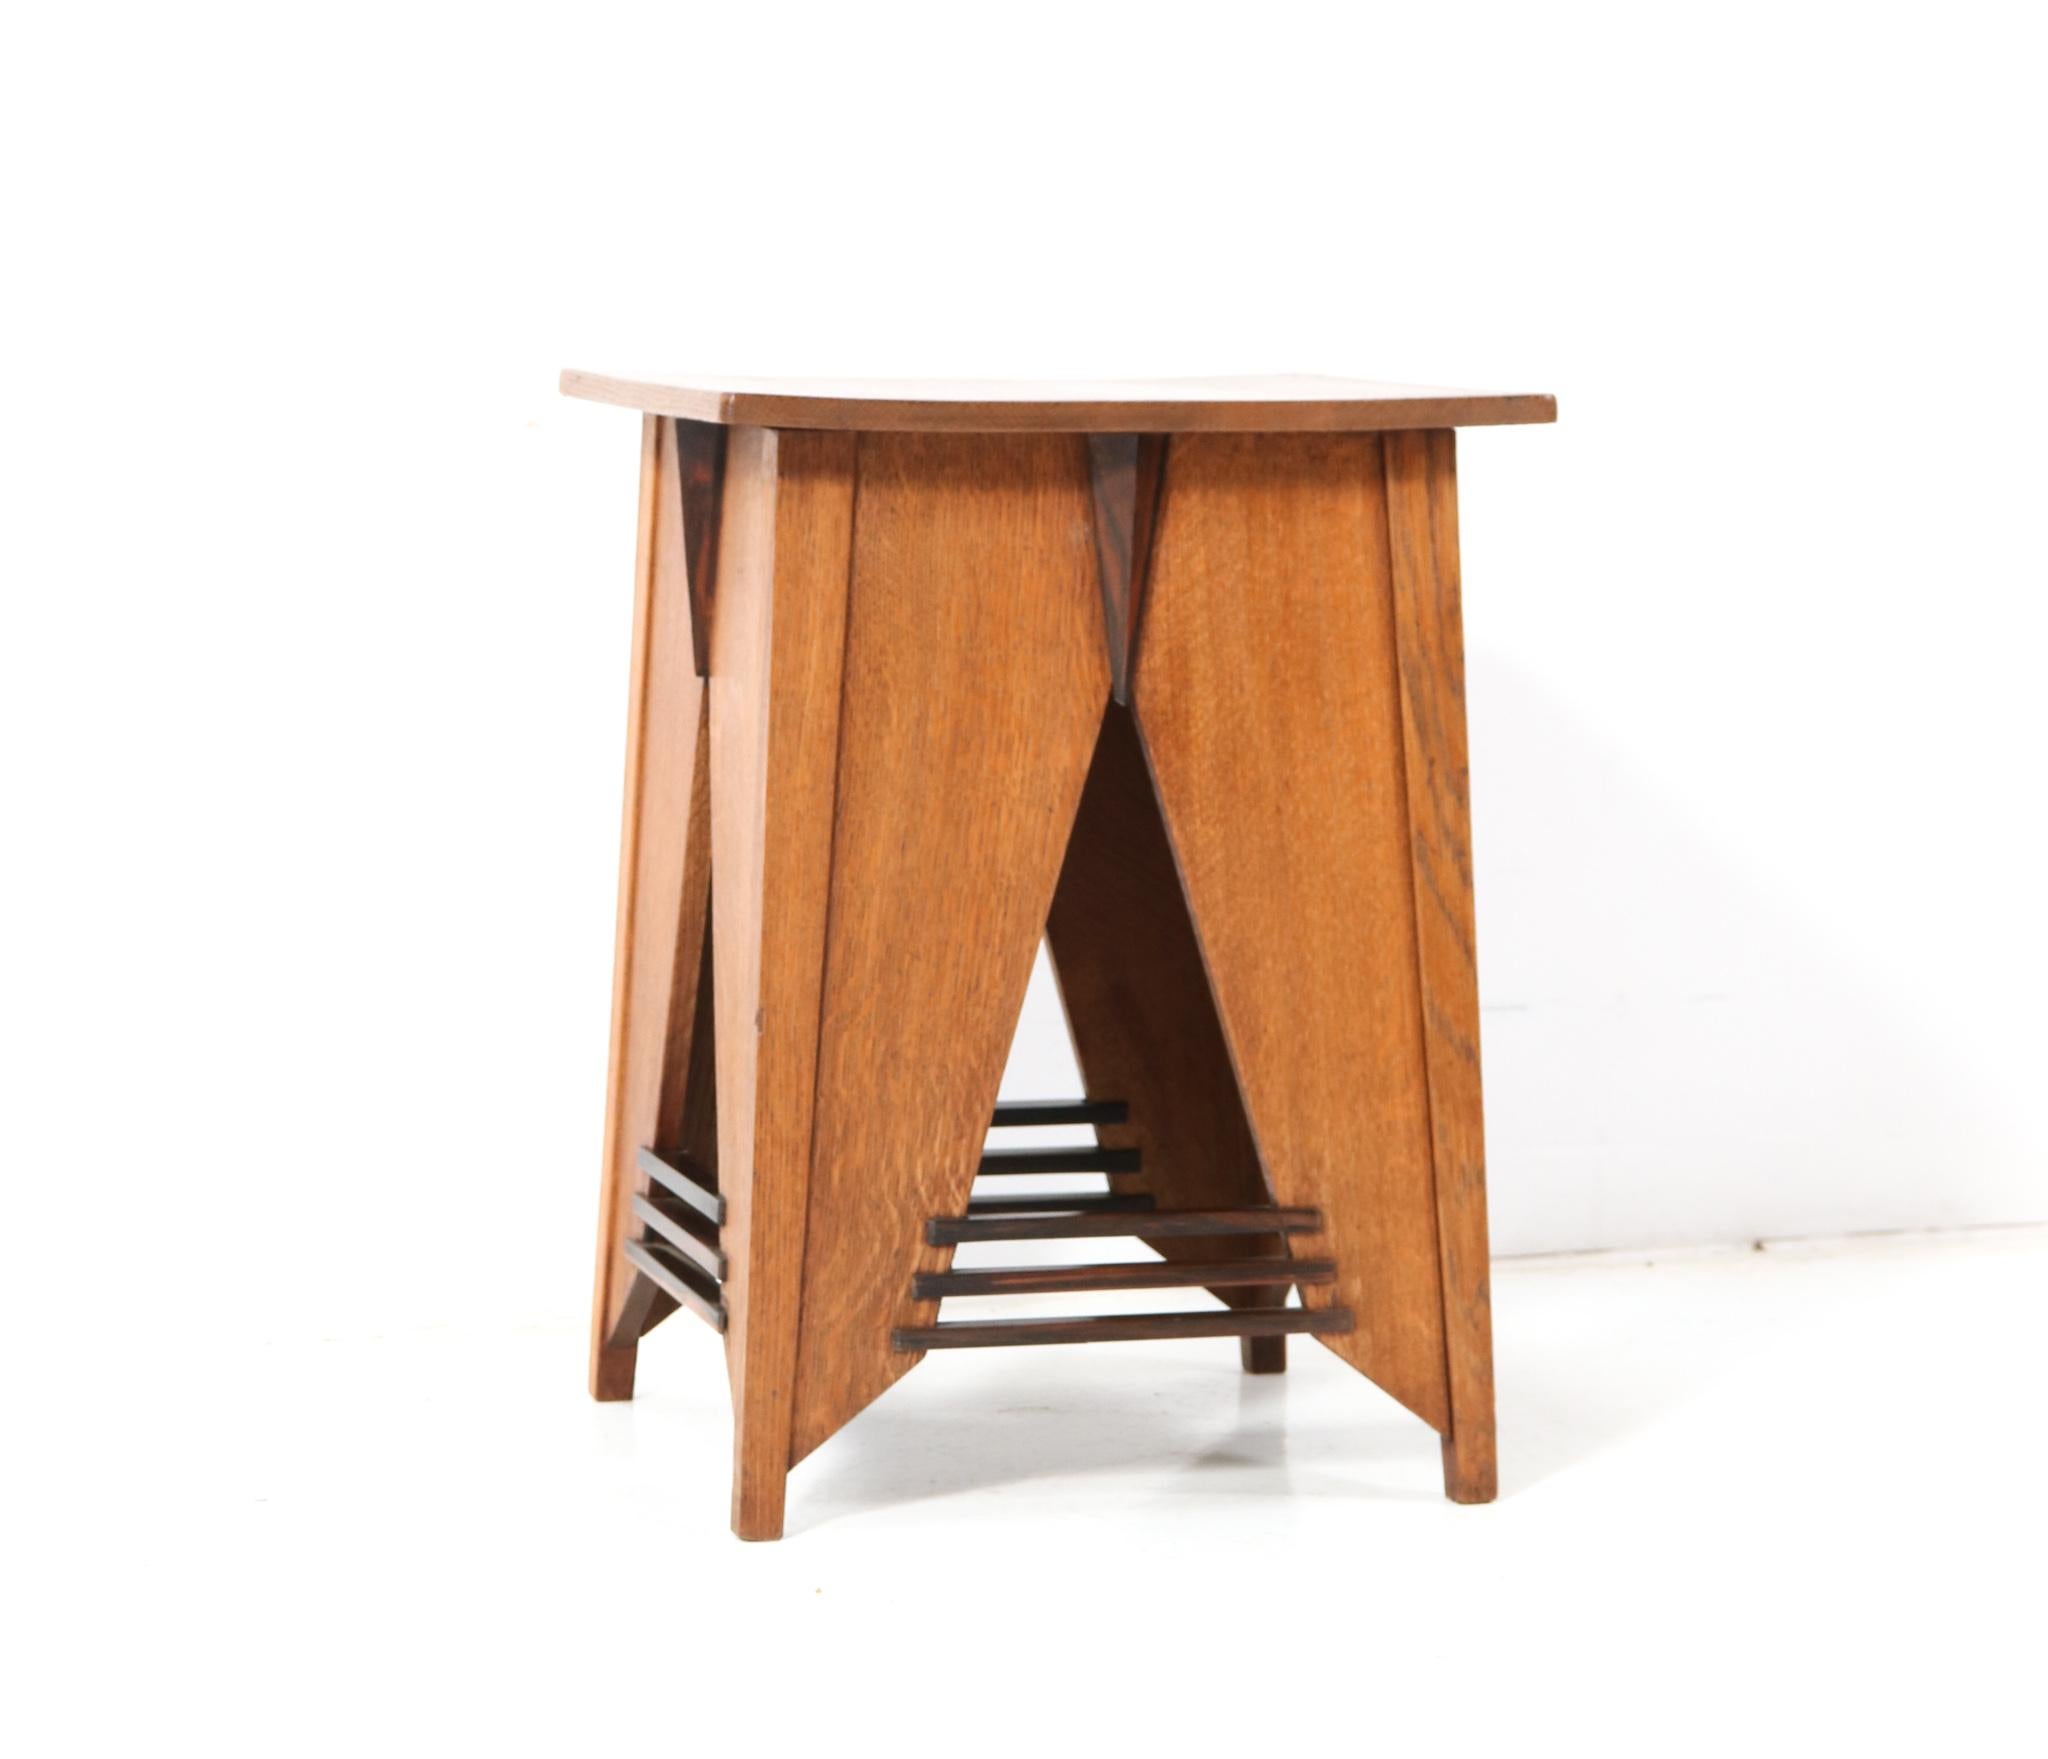 Two Oak Art Deco Modernist Side Tables by P.E.L. Izeren for De Genneper Molen 1